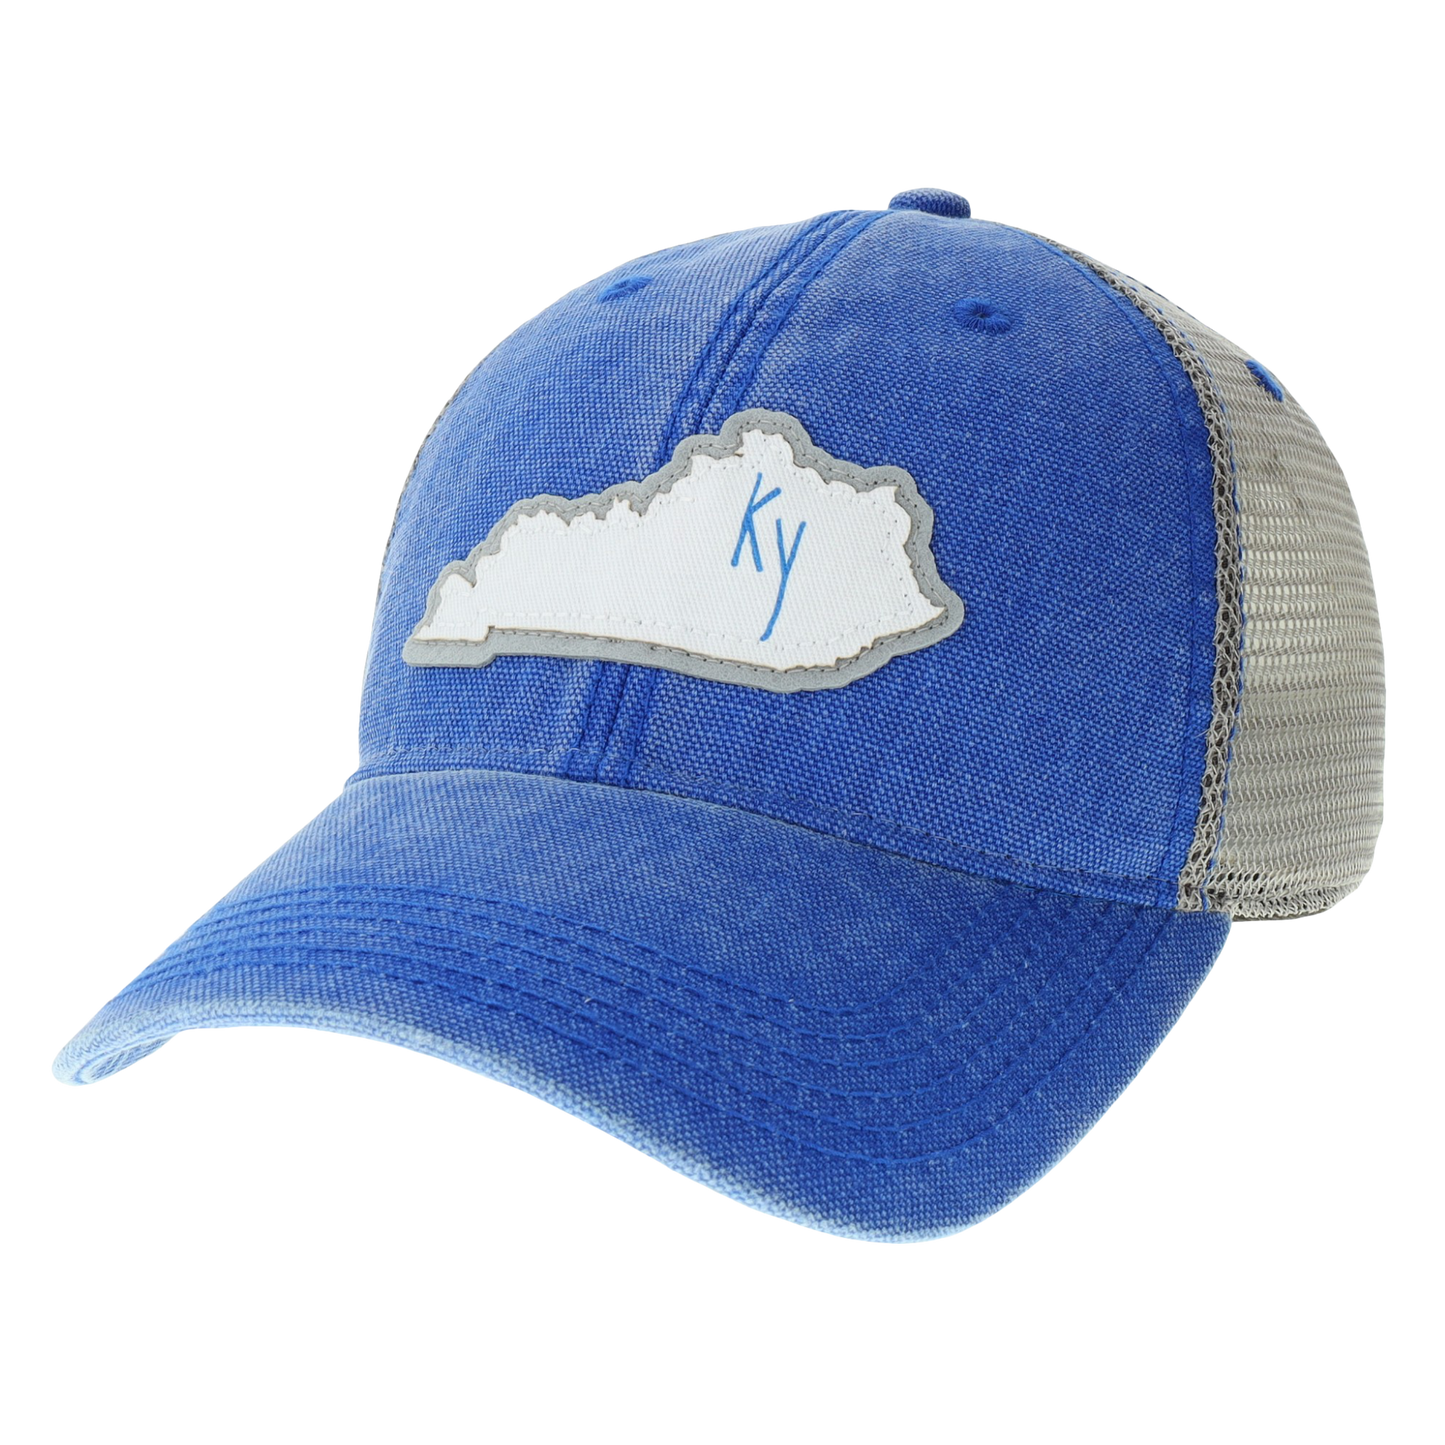 Kentucky Dashboard Trucker Hat in Royal Blue/Grey